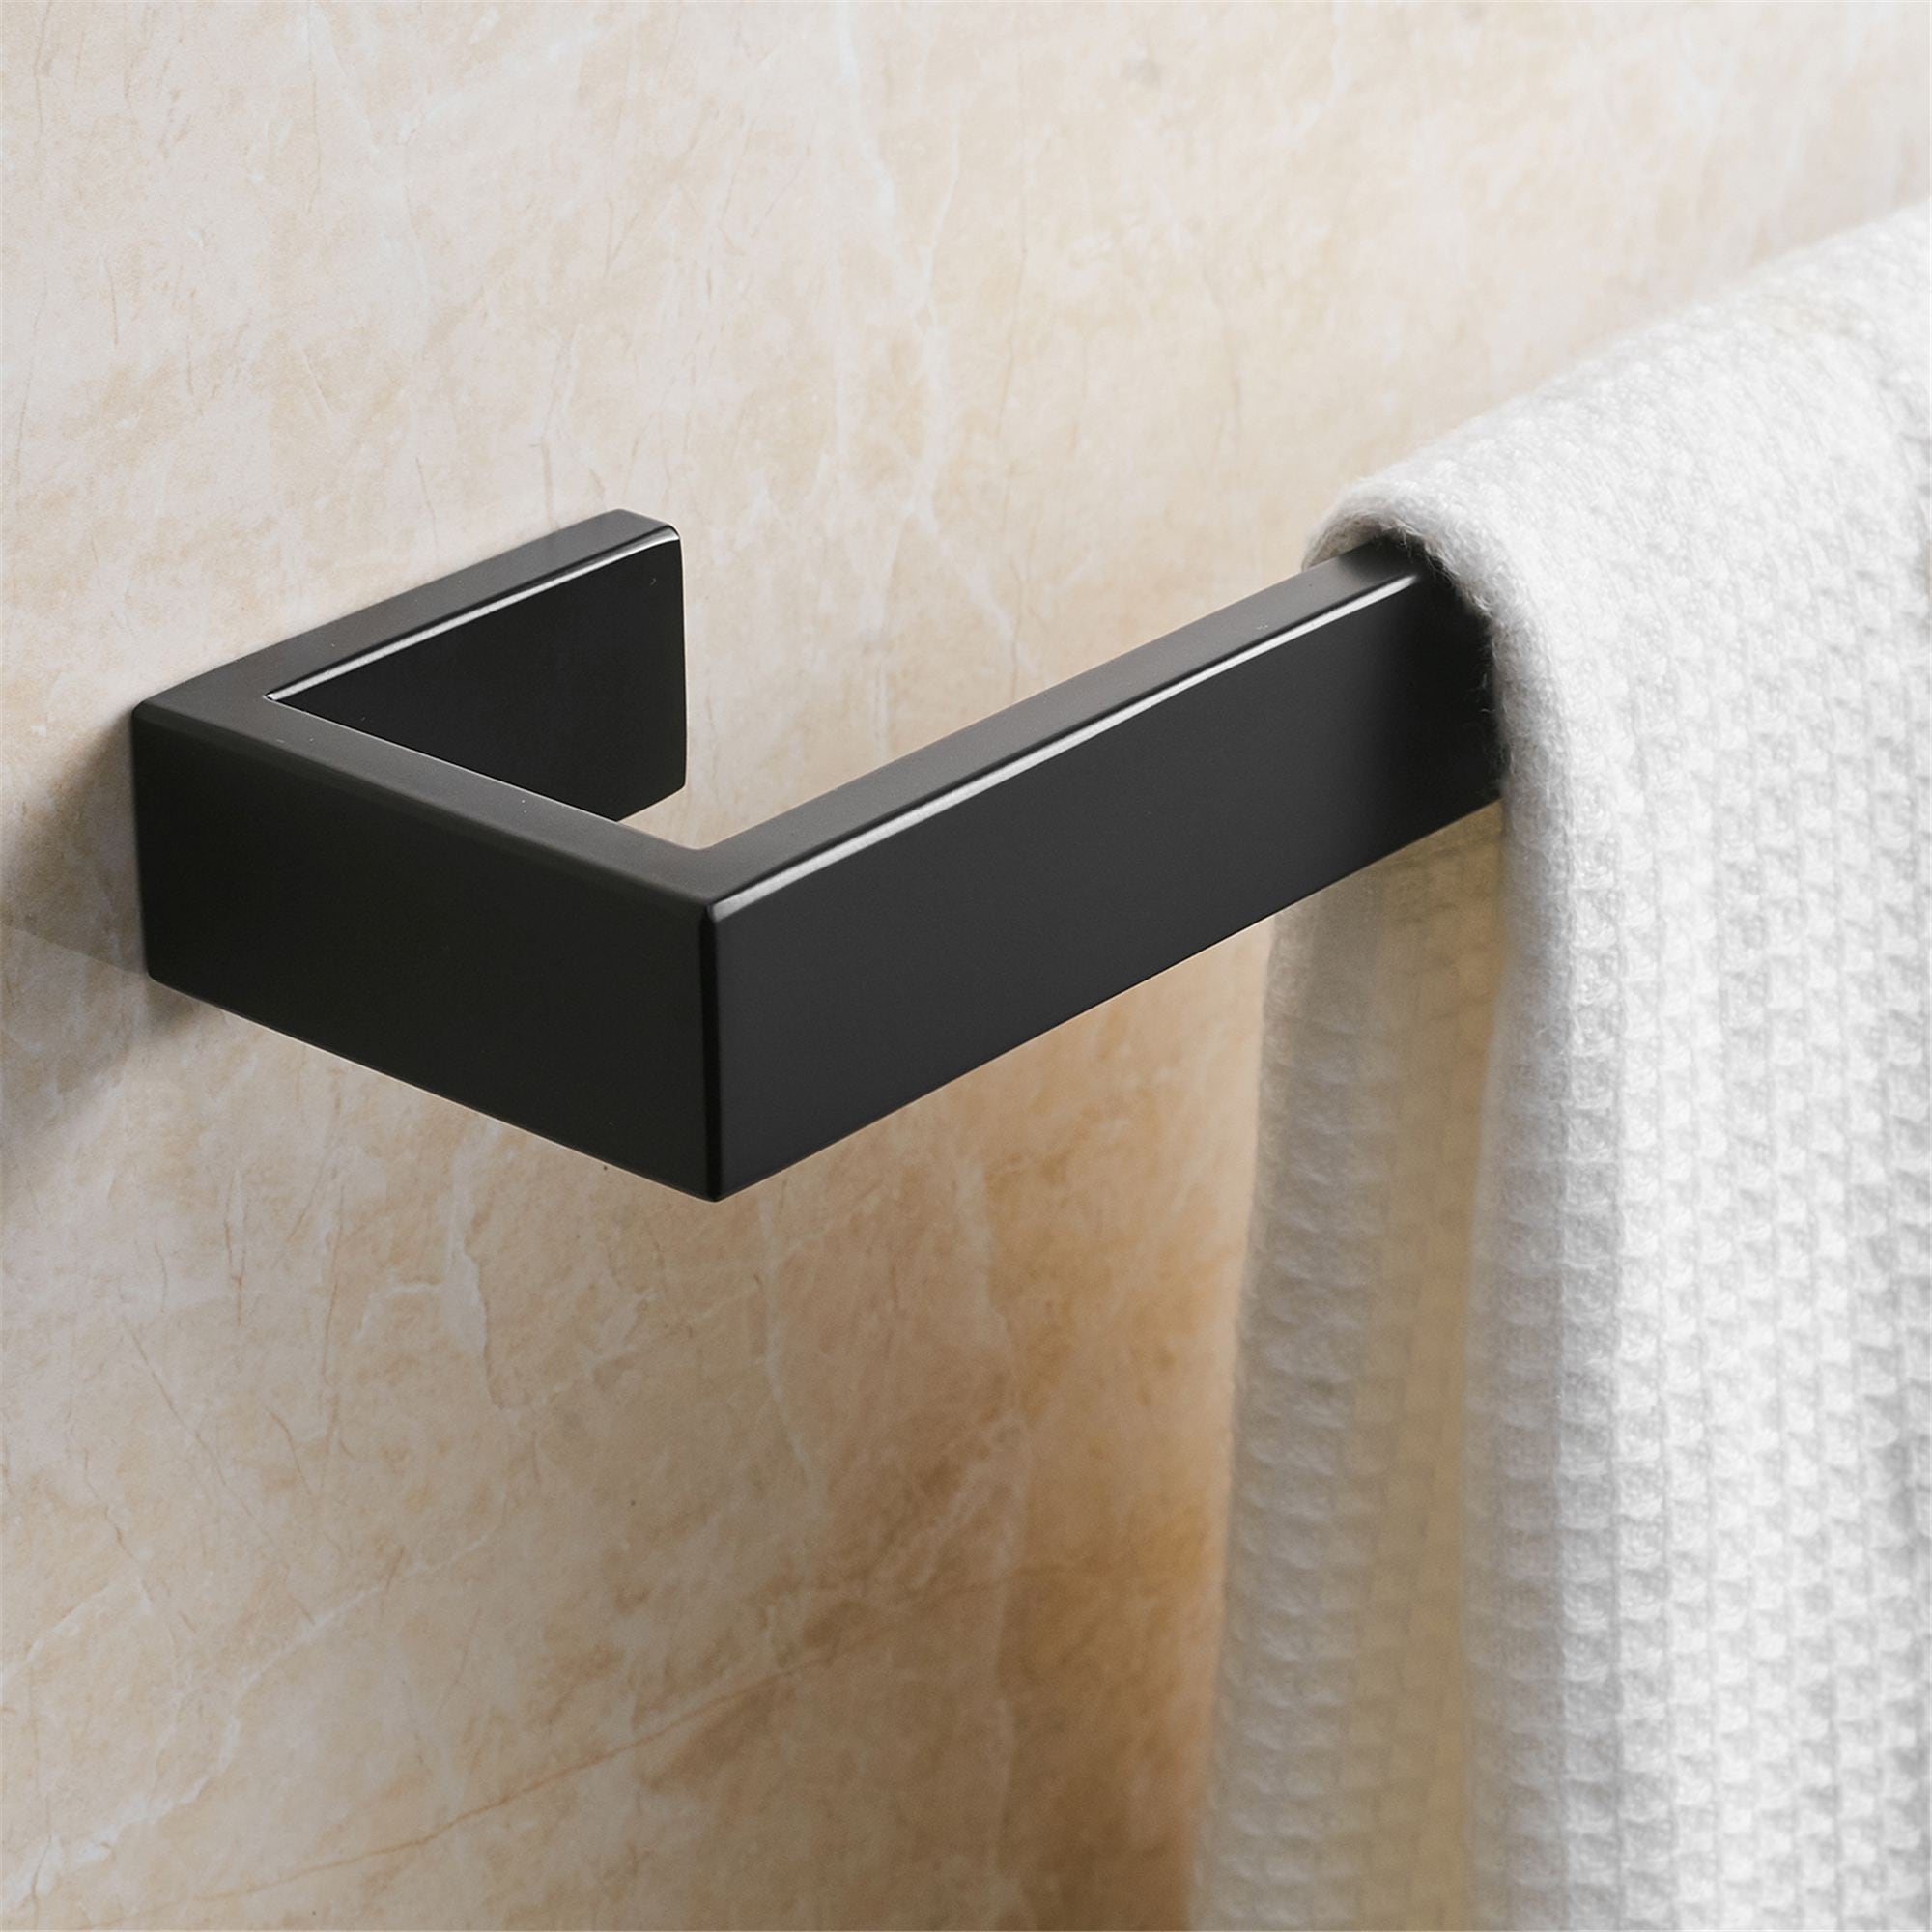 24.4'' Wall Mounted Towel Bar Stainless Steel Bathroom Hardware